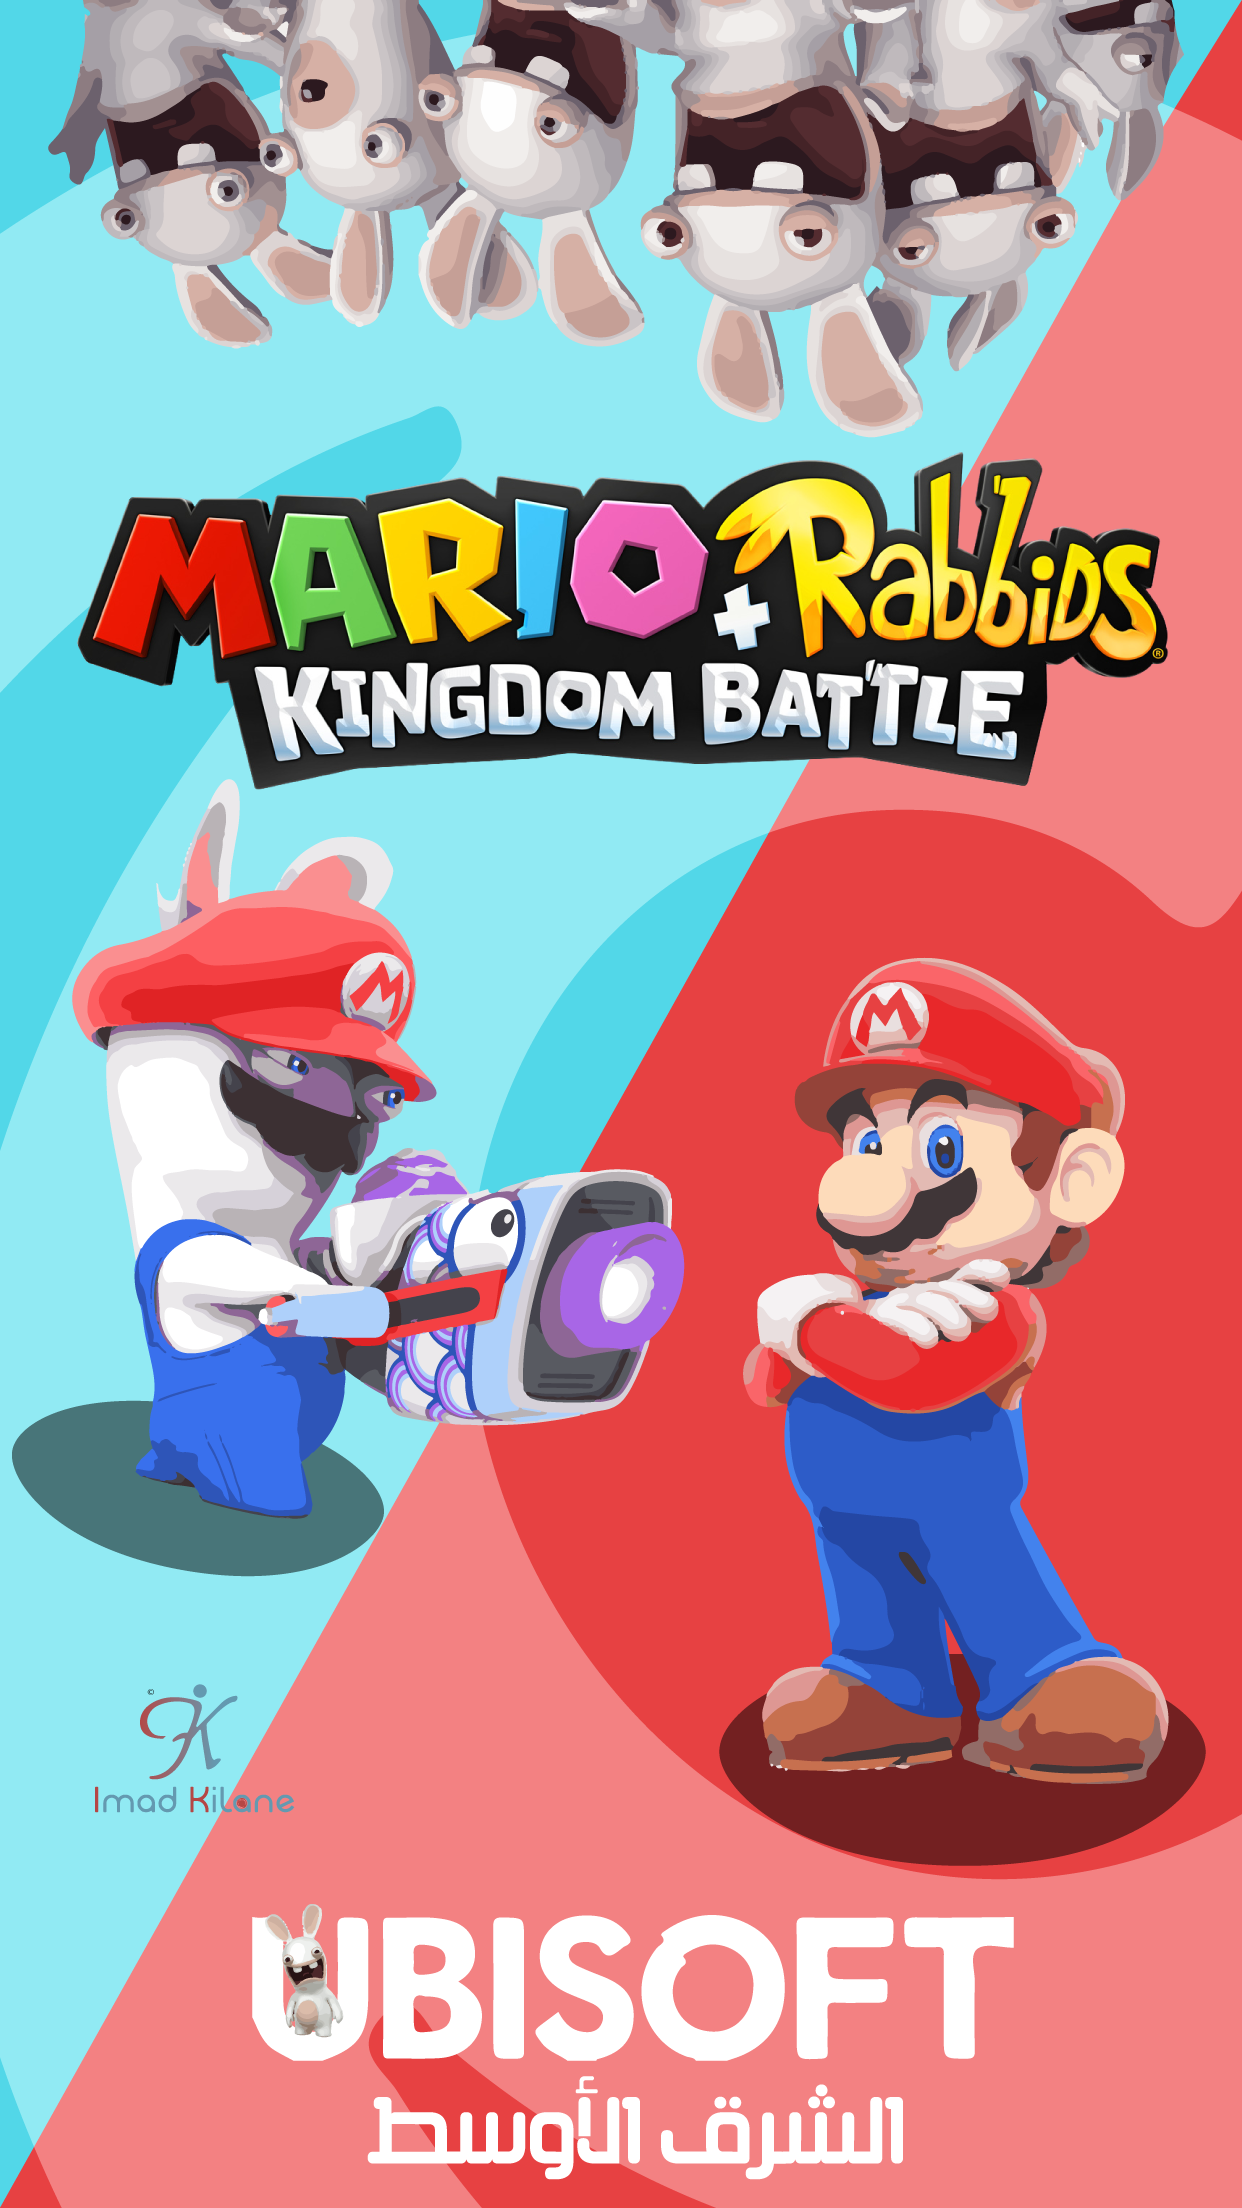 Mario + Rabbids Kingdom Battle Wallpapers